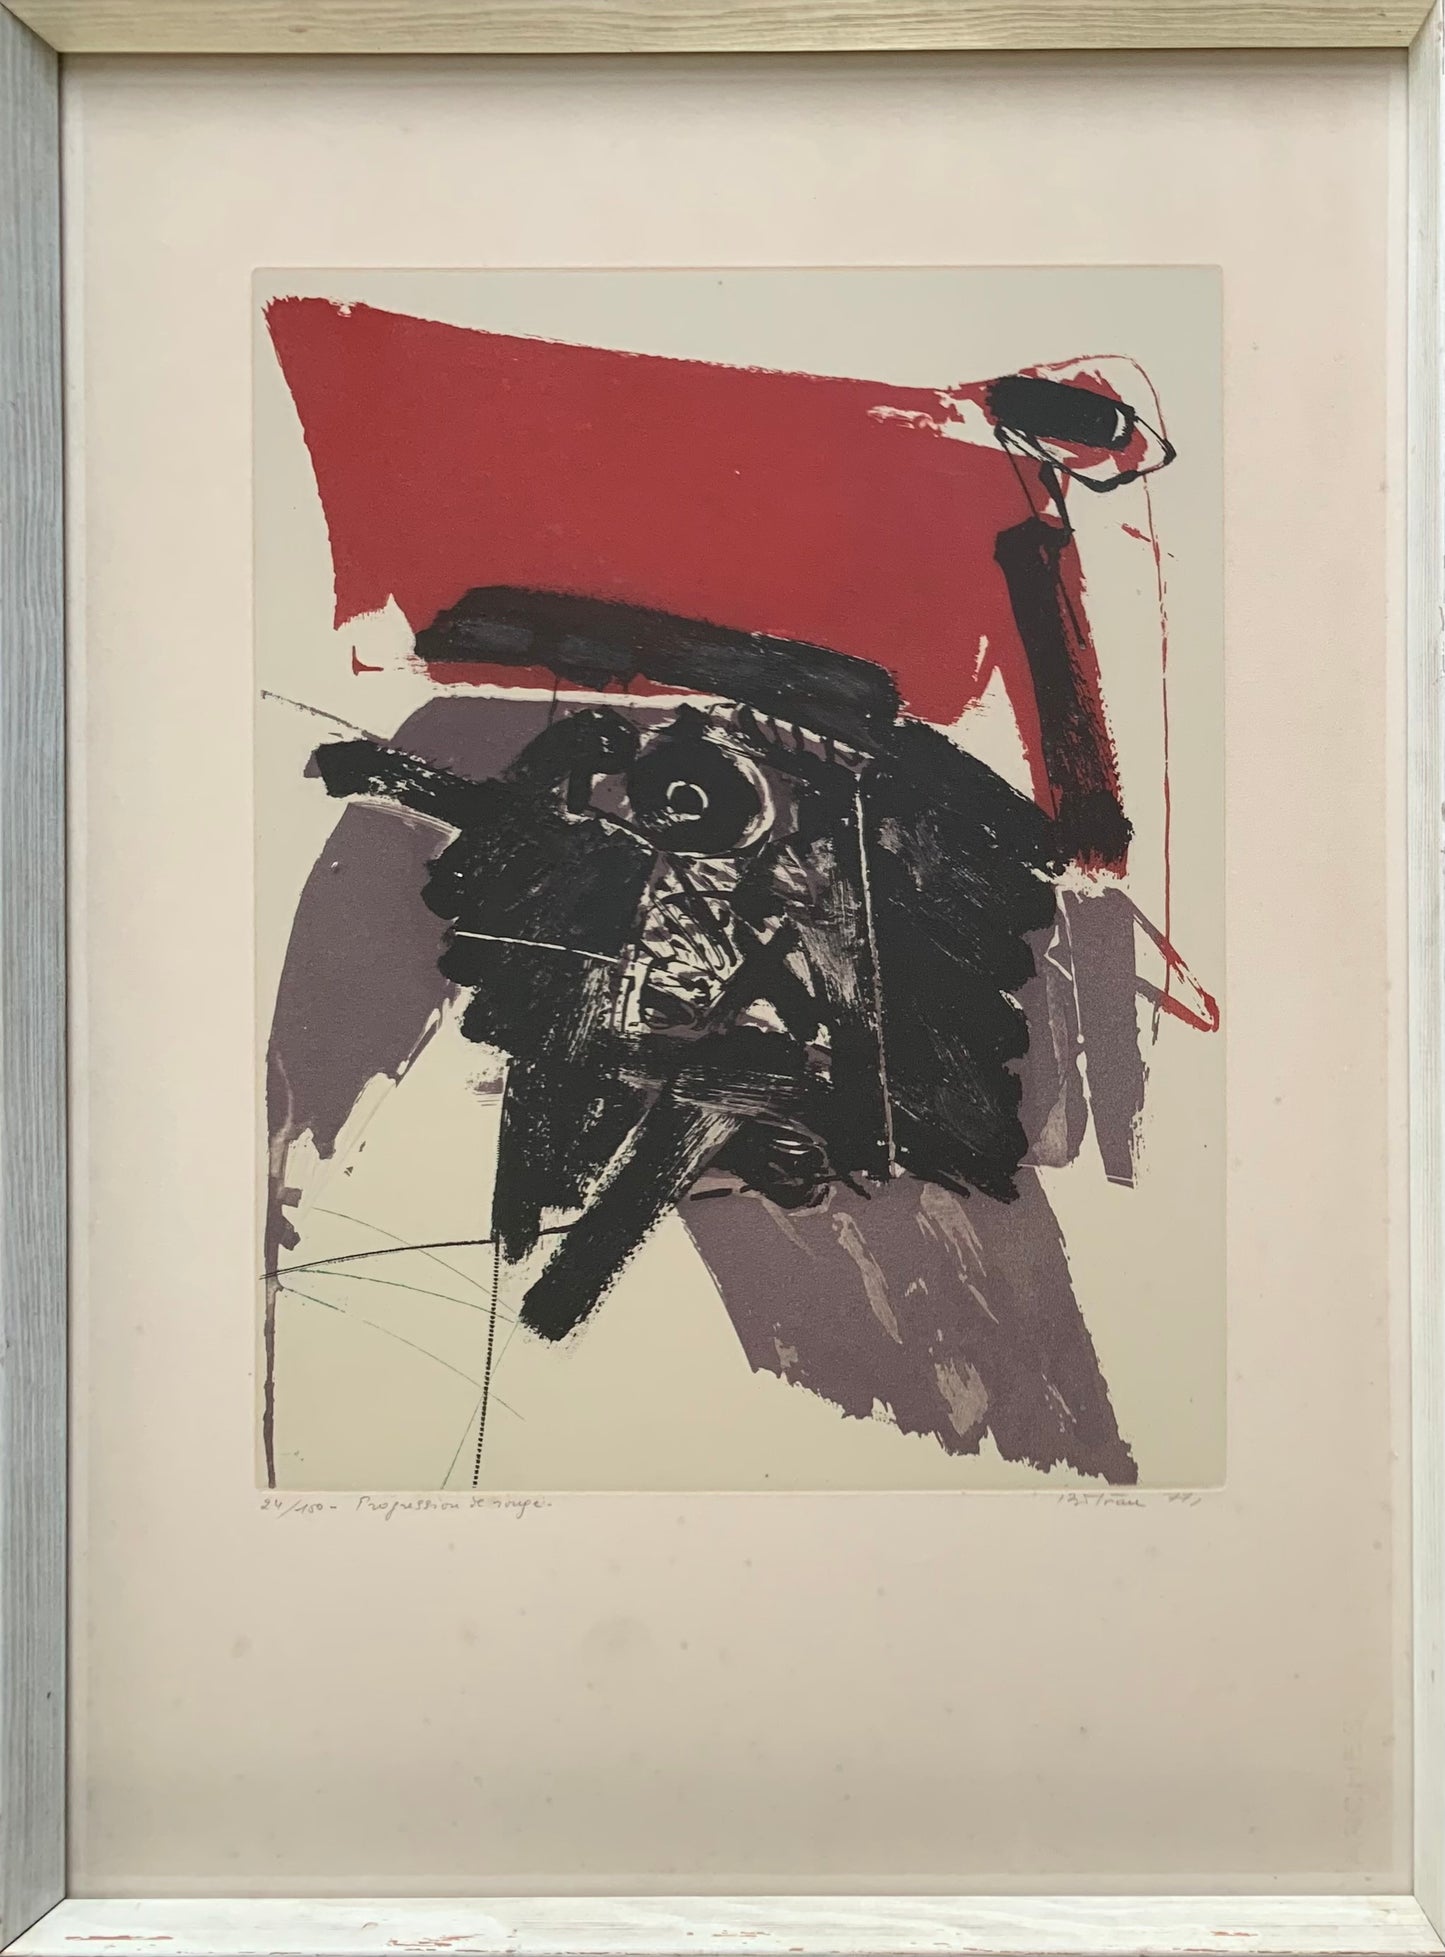 Albert Bitran. “Progression de rouge”, 1977